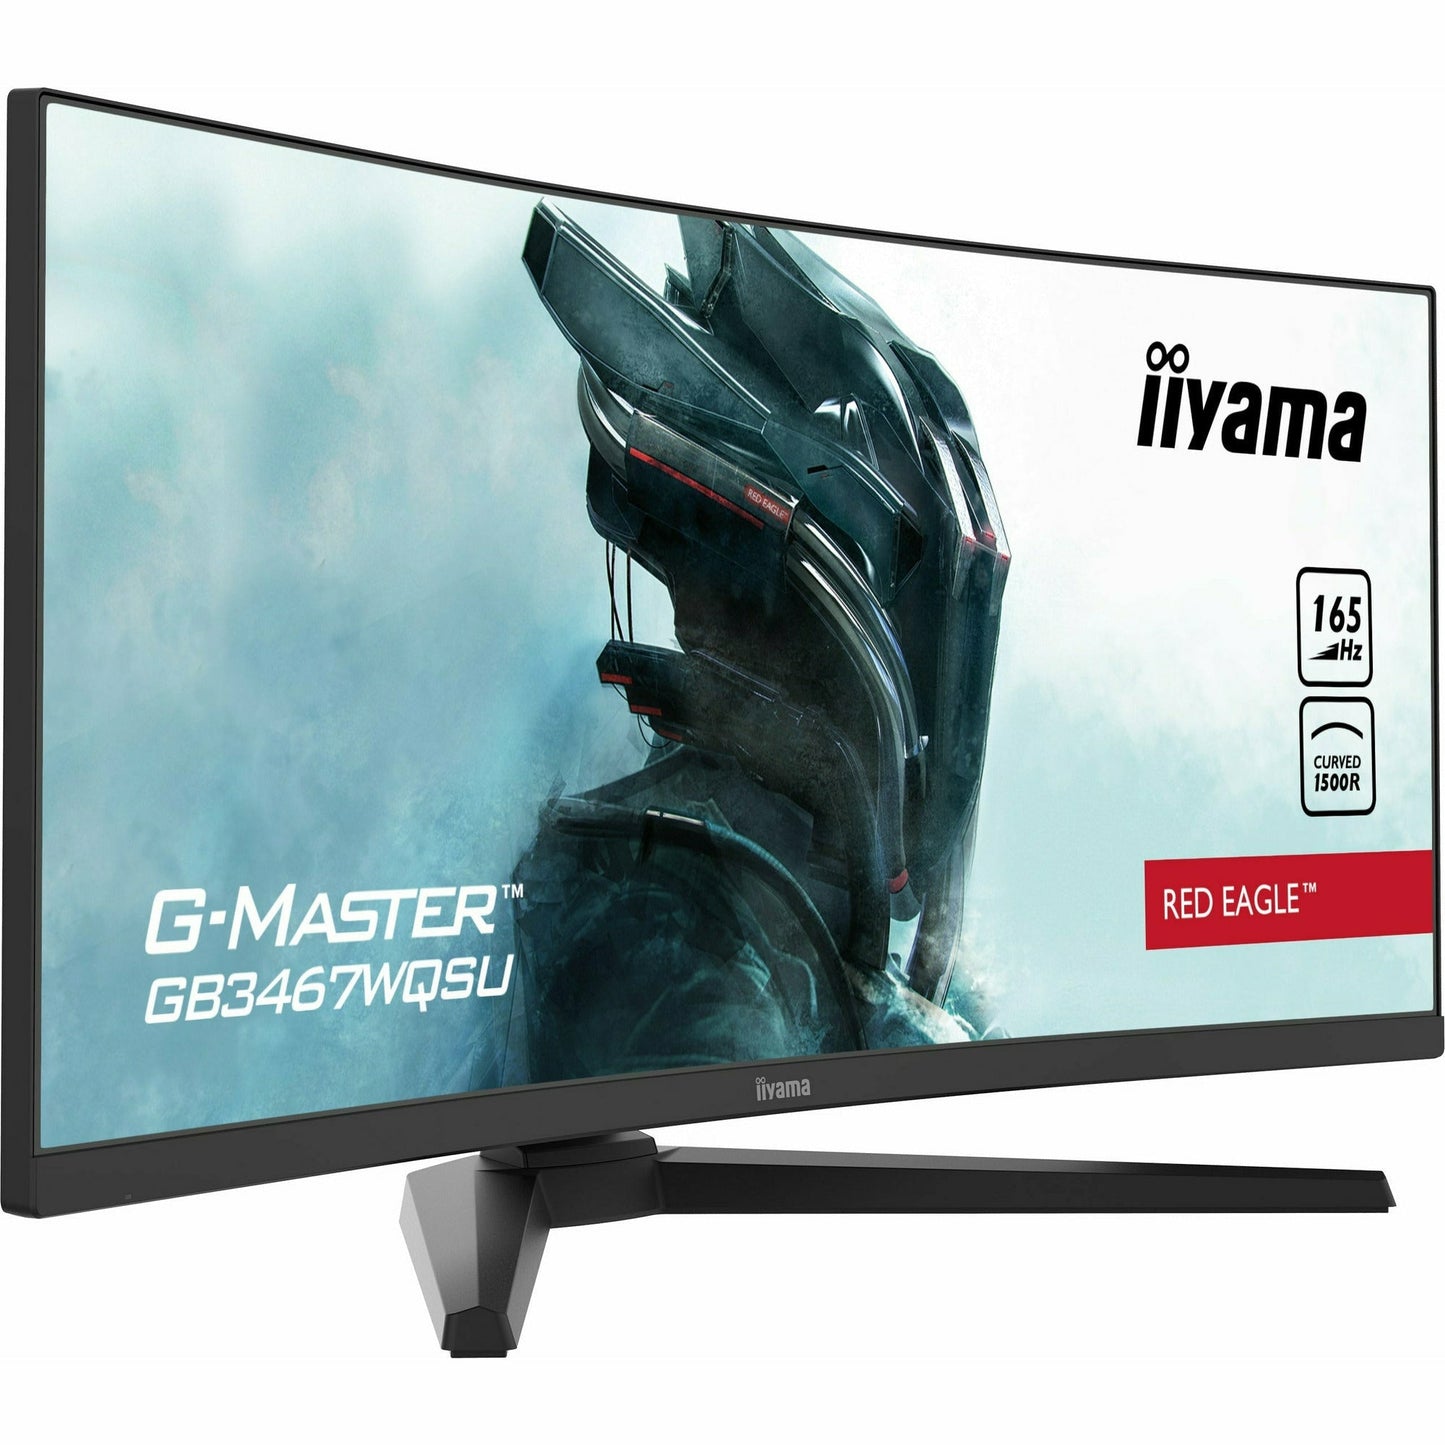 iiyama G-Master GB3467WQSU-B1 Red Eagle 34" Curved 1500R Gaming Monitor